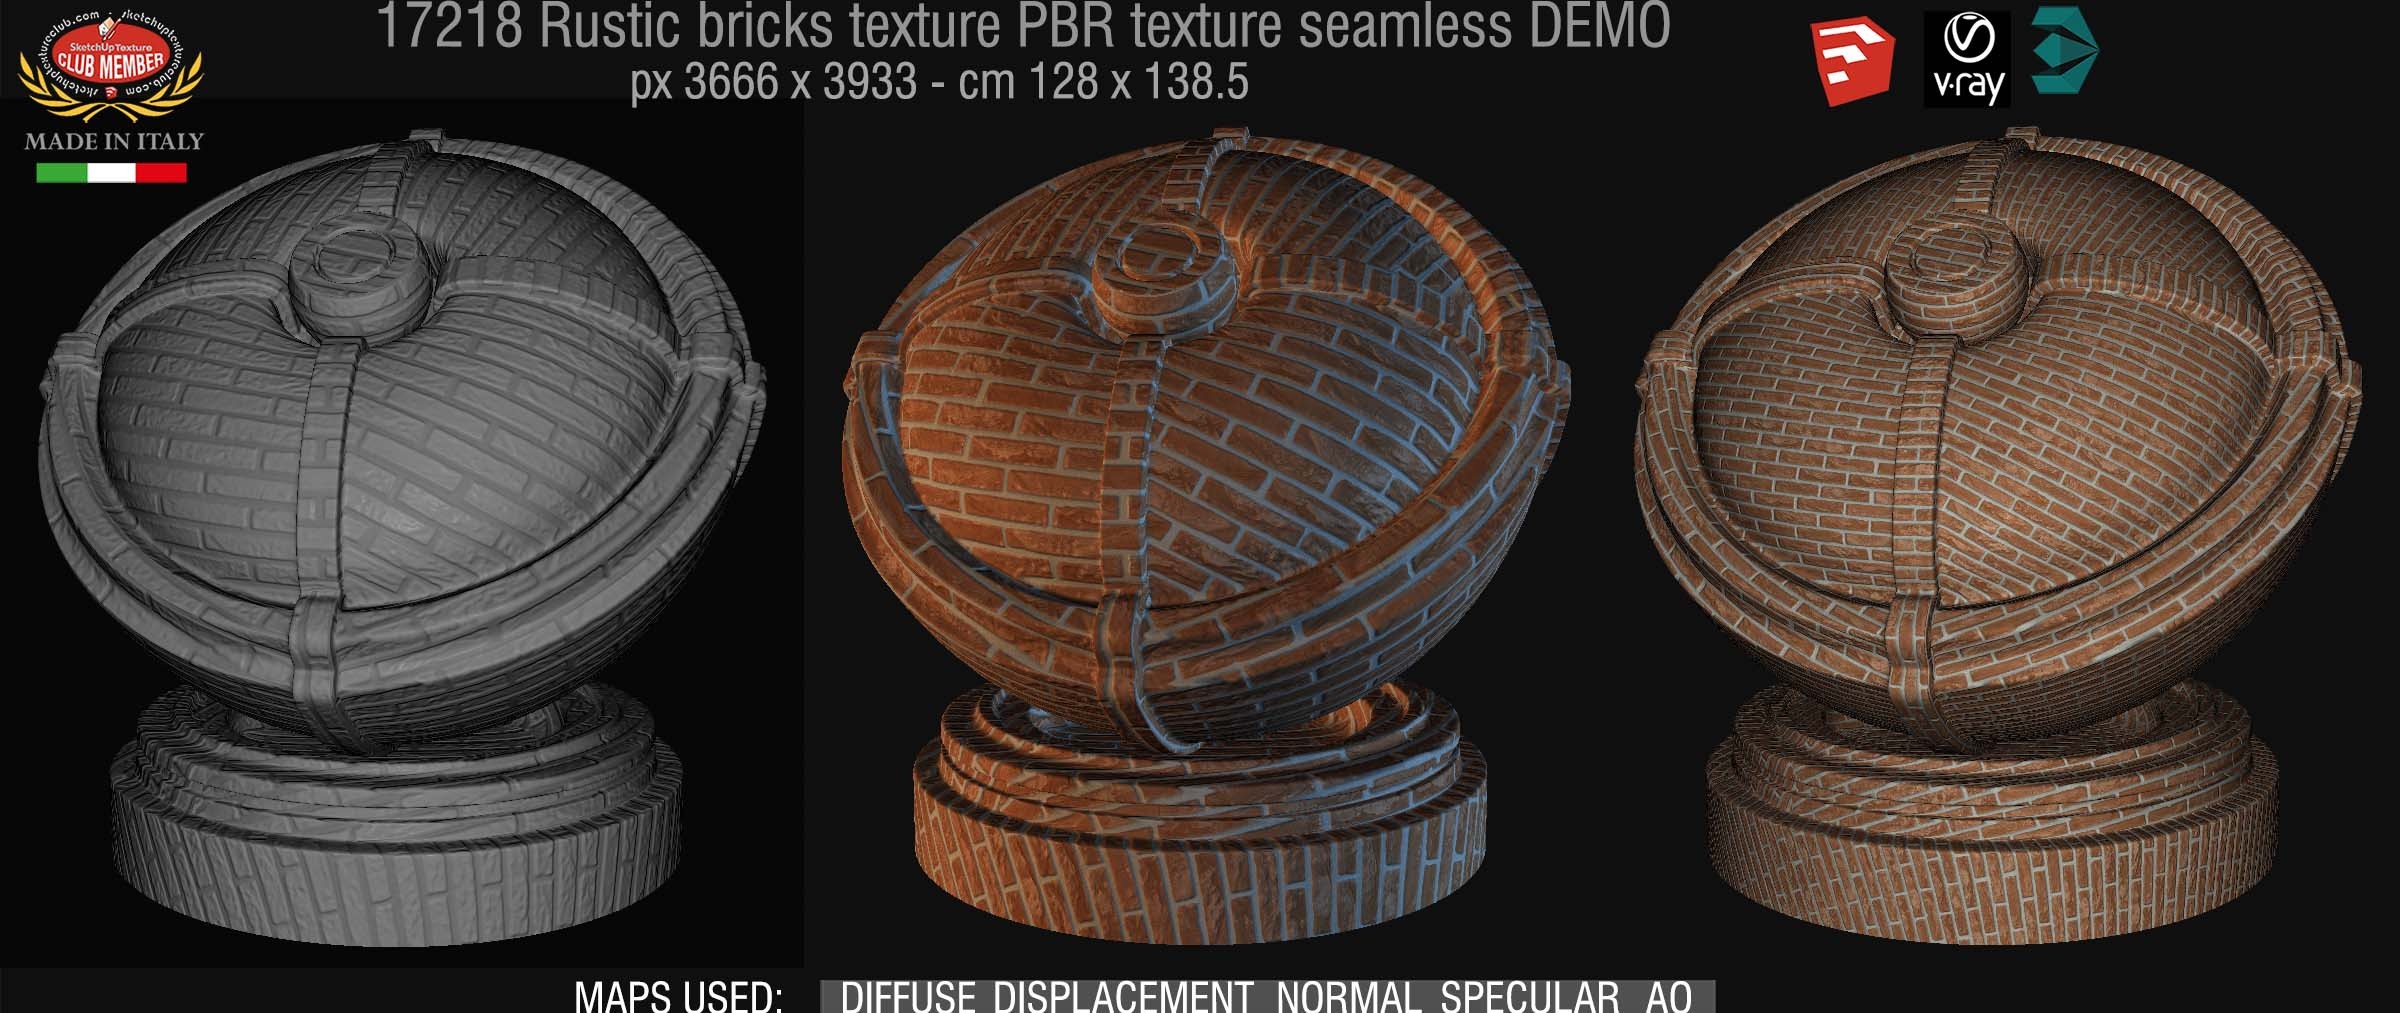 17218 Rustic bricks PBR texture seamless DEMO